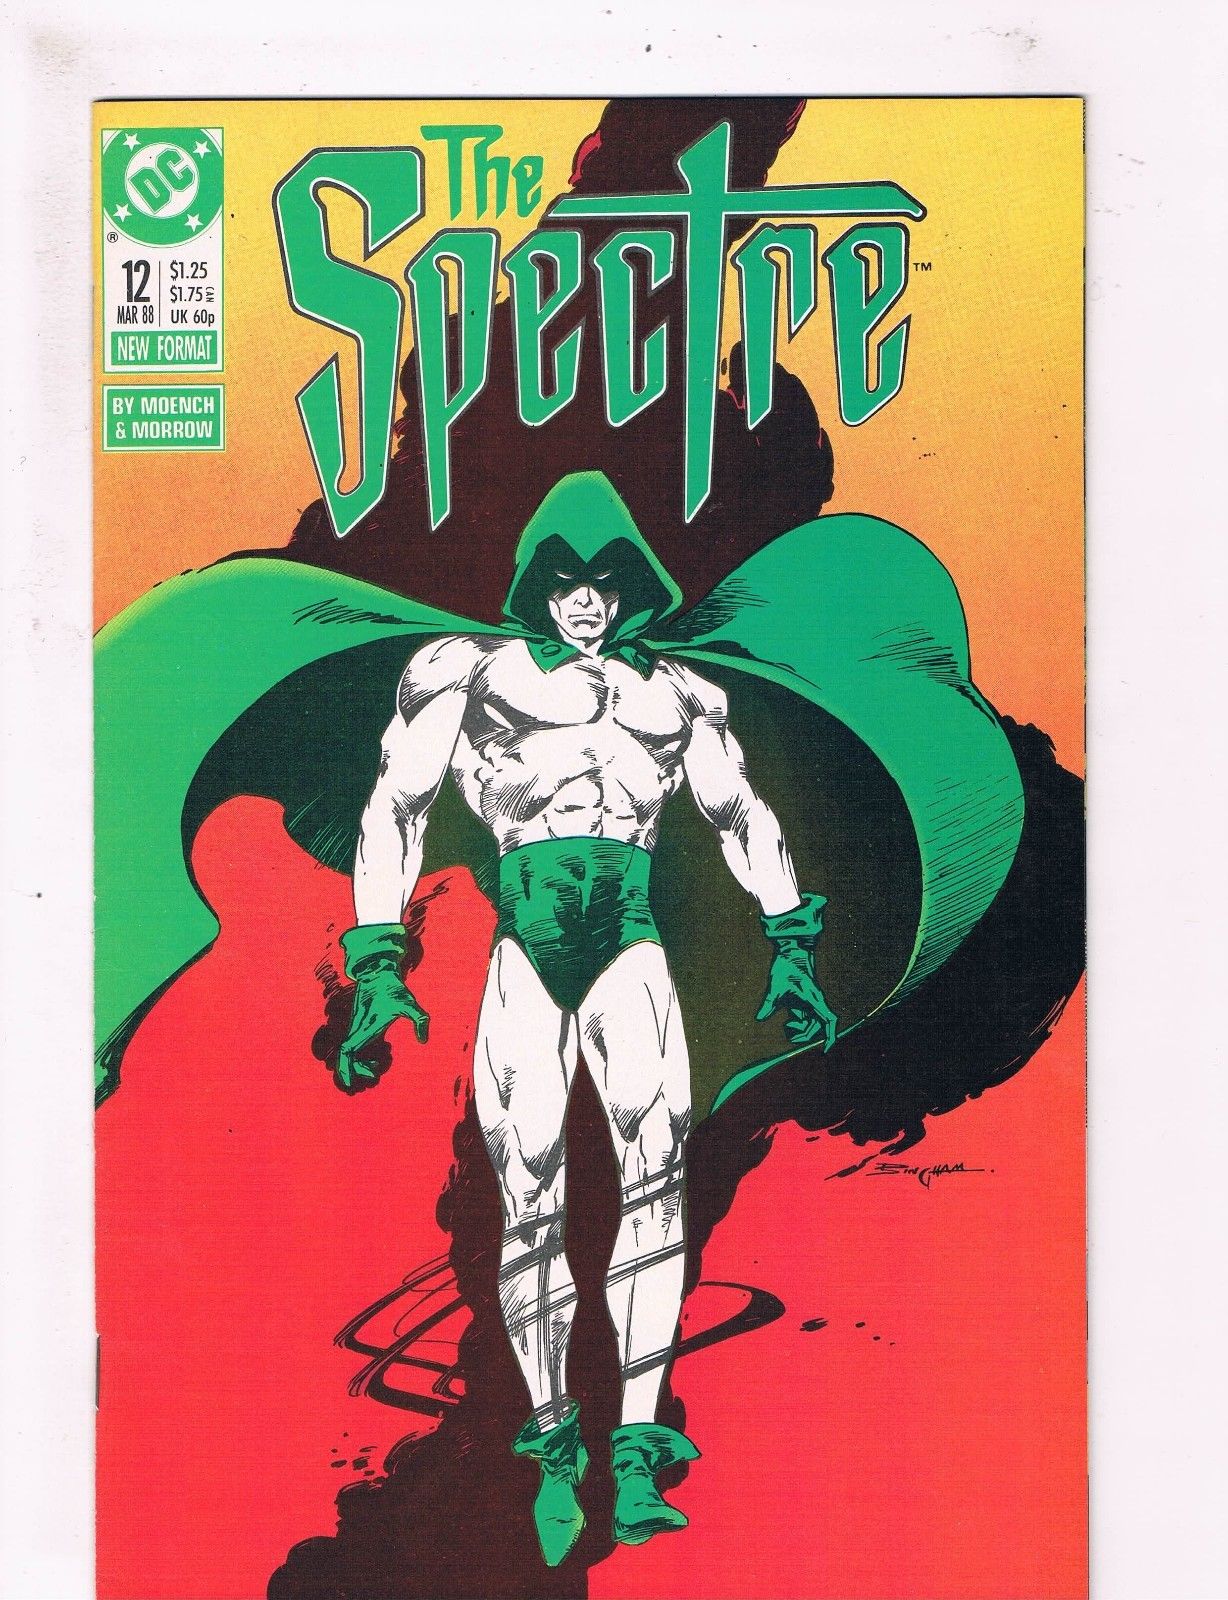 The Spectre #24 February 1989 DC Comics Moench